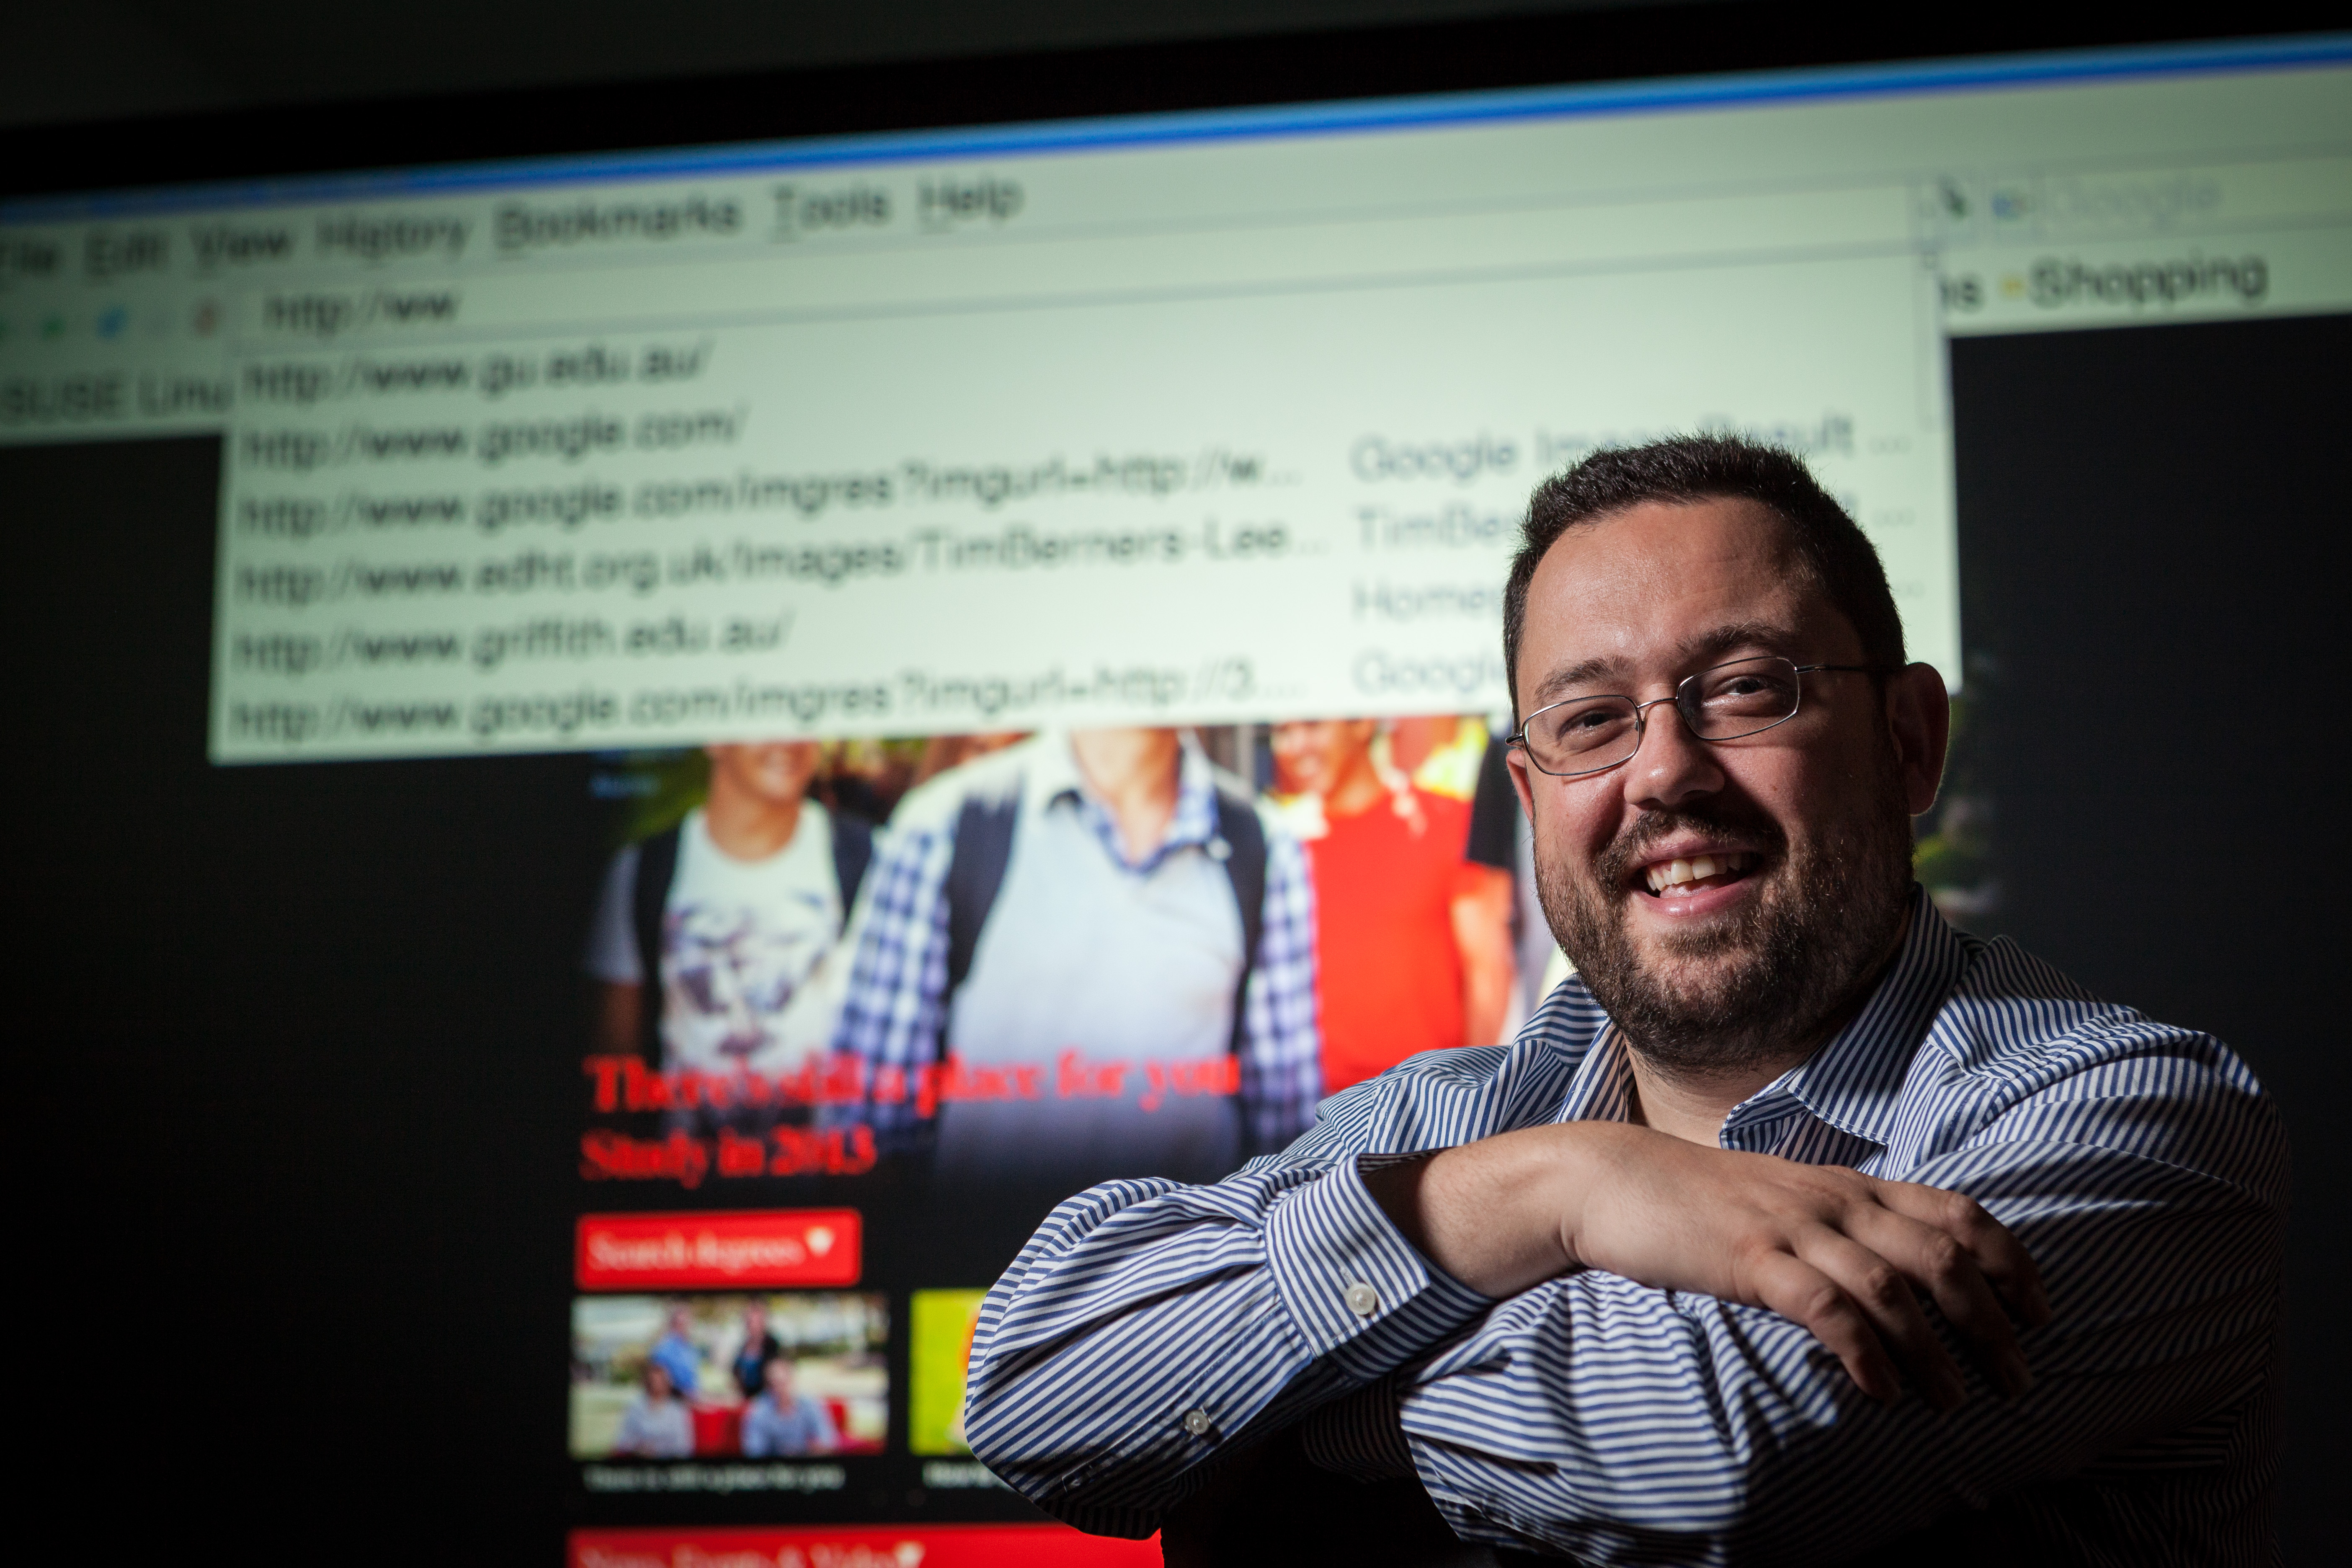 Professor Michael Blumenstein smiling in front of projection screen